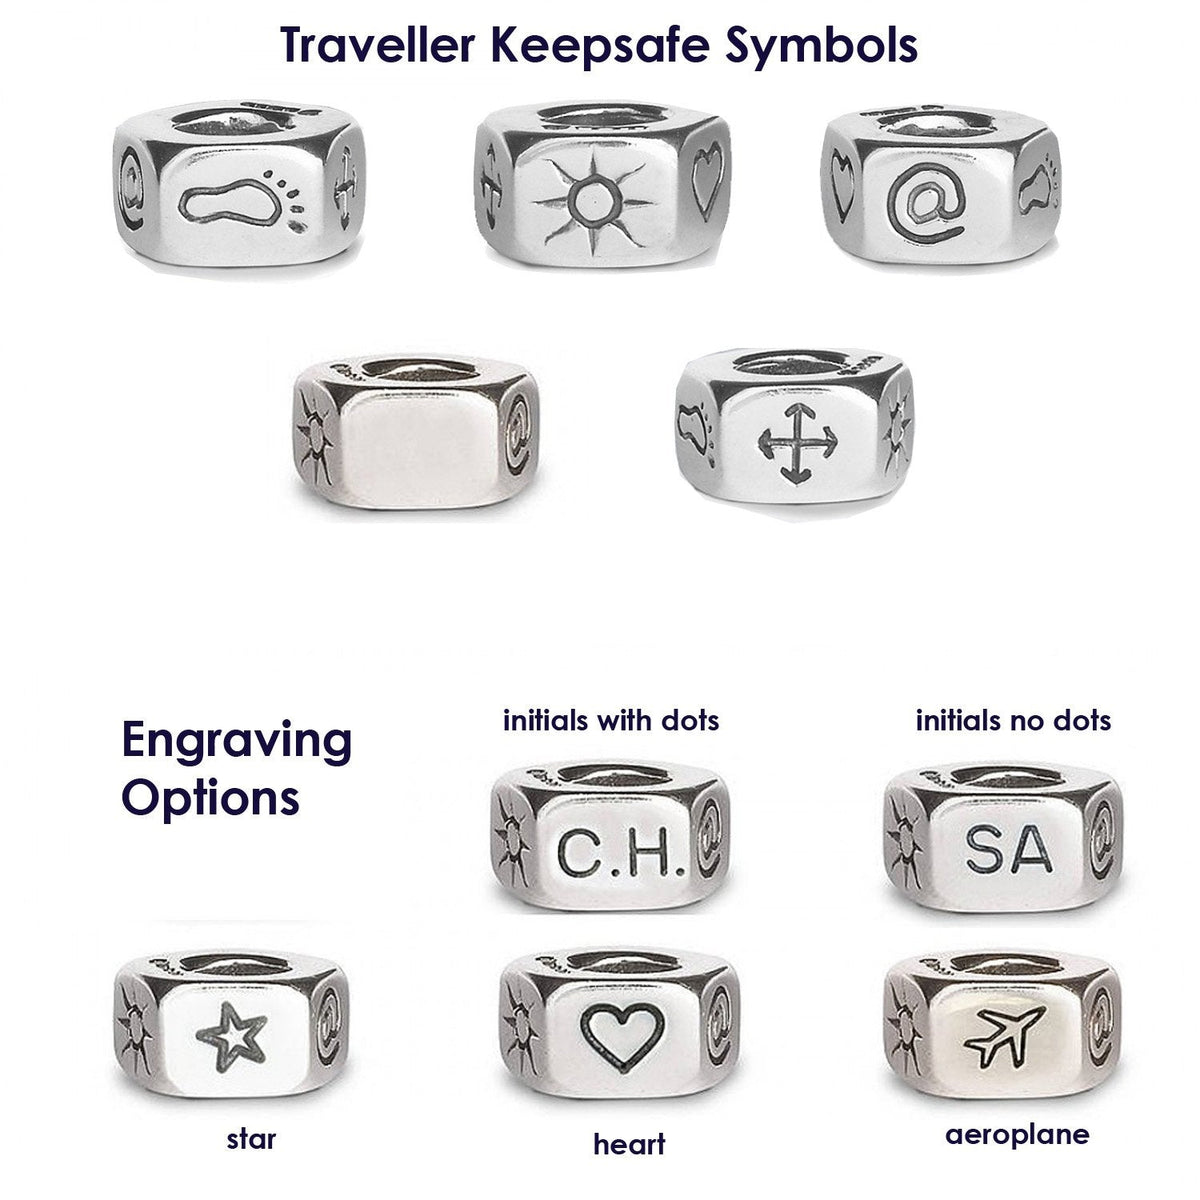 Traveller Keepsafe Symbols Off The Map Jewellery